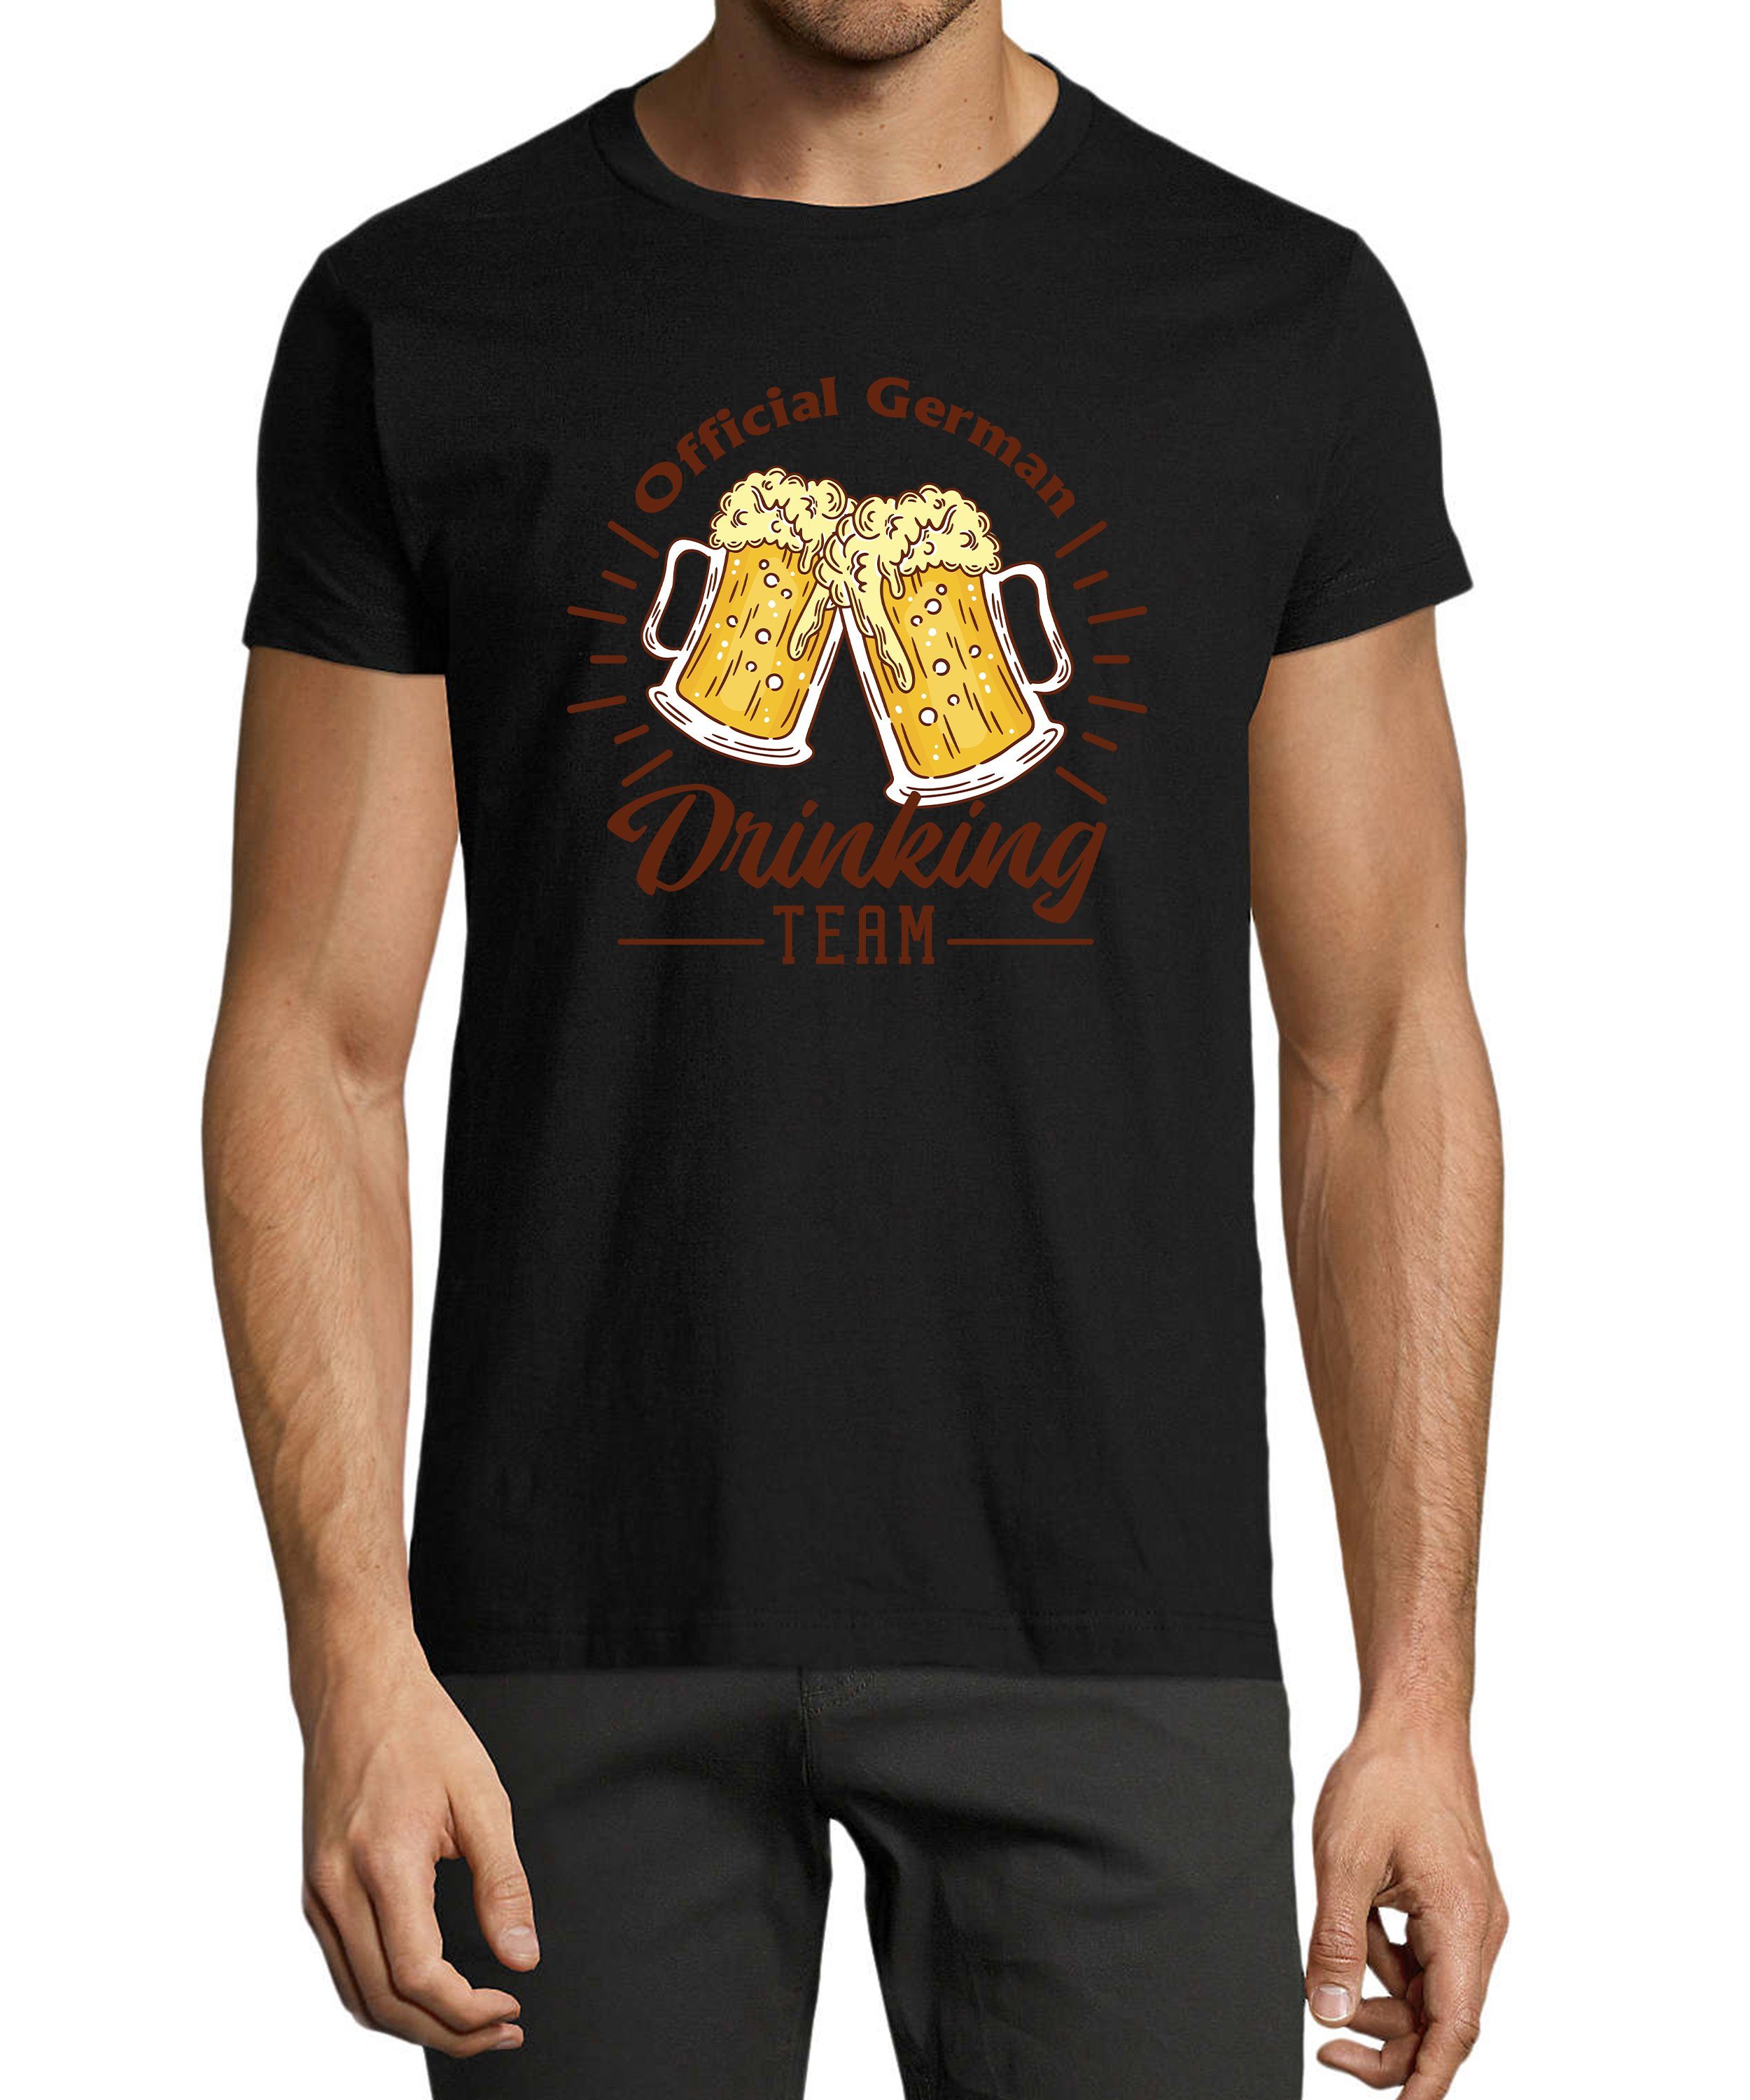 MyDesign24 T-Shirt Herren Fun Print Shirt - Oktoberfest official Drinking Team Baumwollshirt mit Aufdruck Regular Fit, i304 schwarz